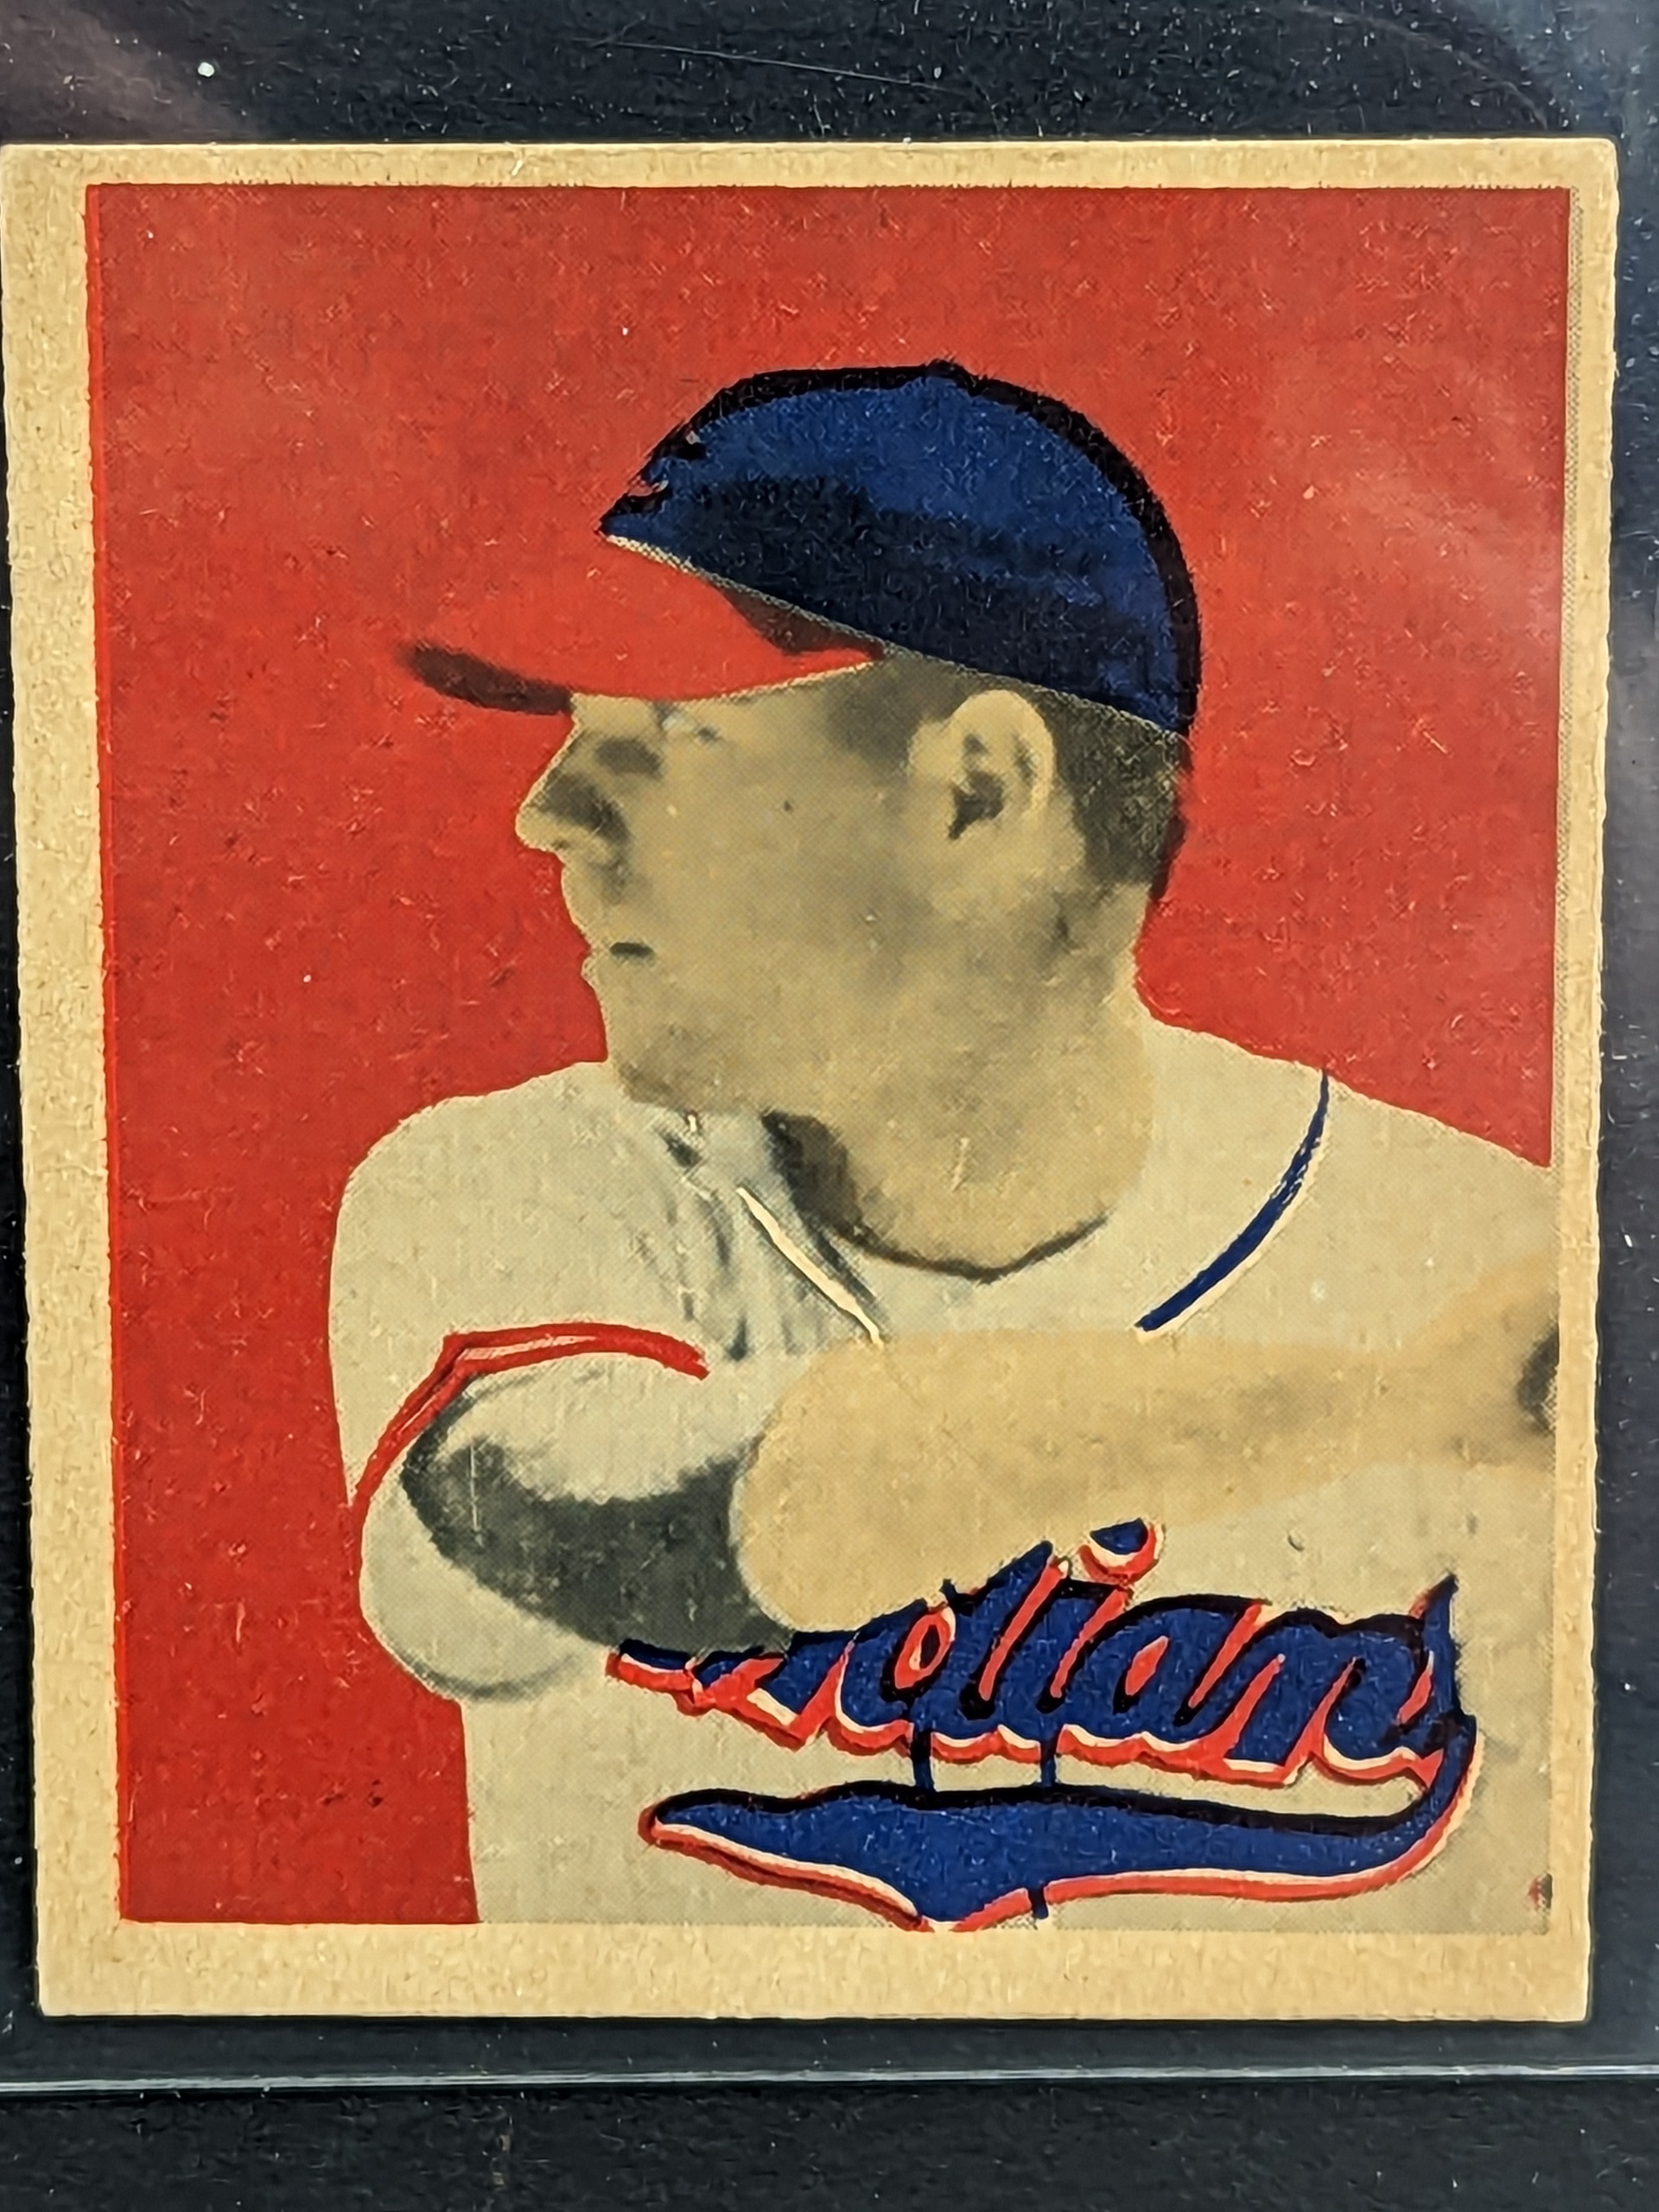 1949 CINCINNATI REDS Print Vintage Baseball Poster. Retro 